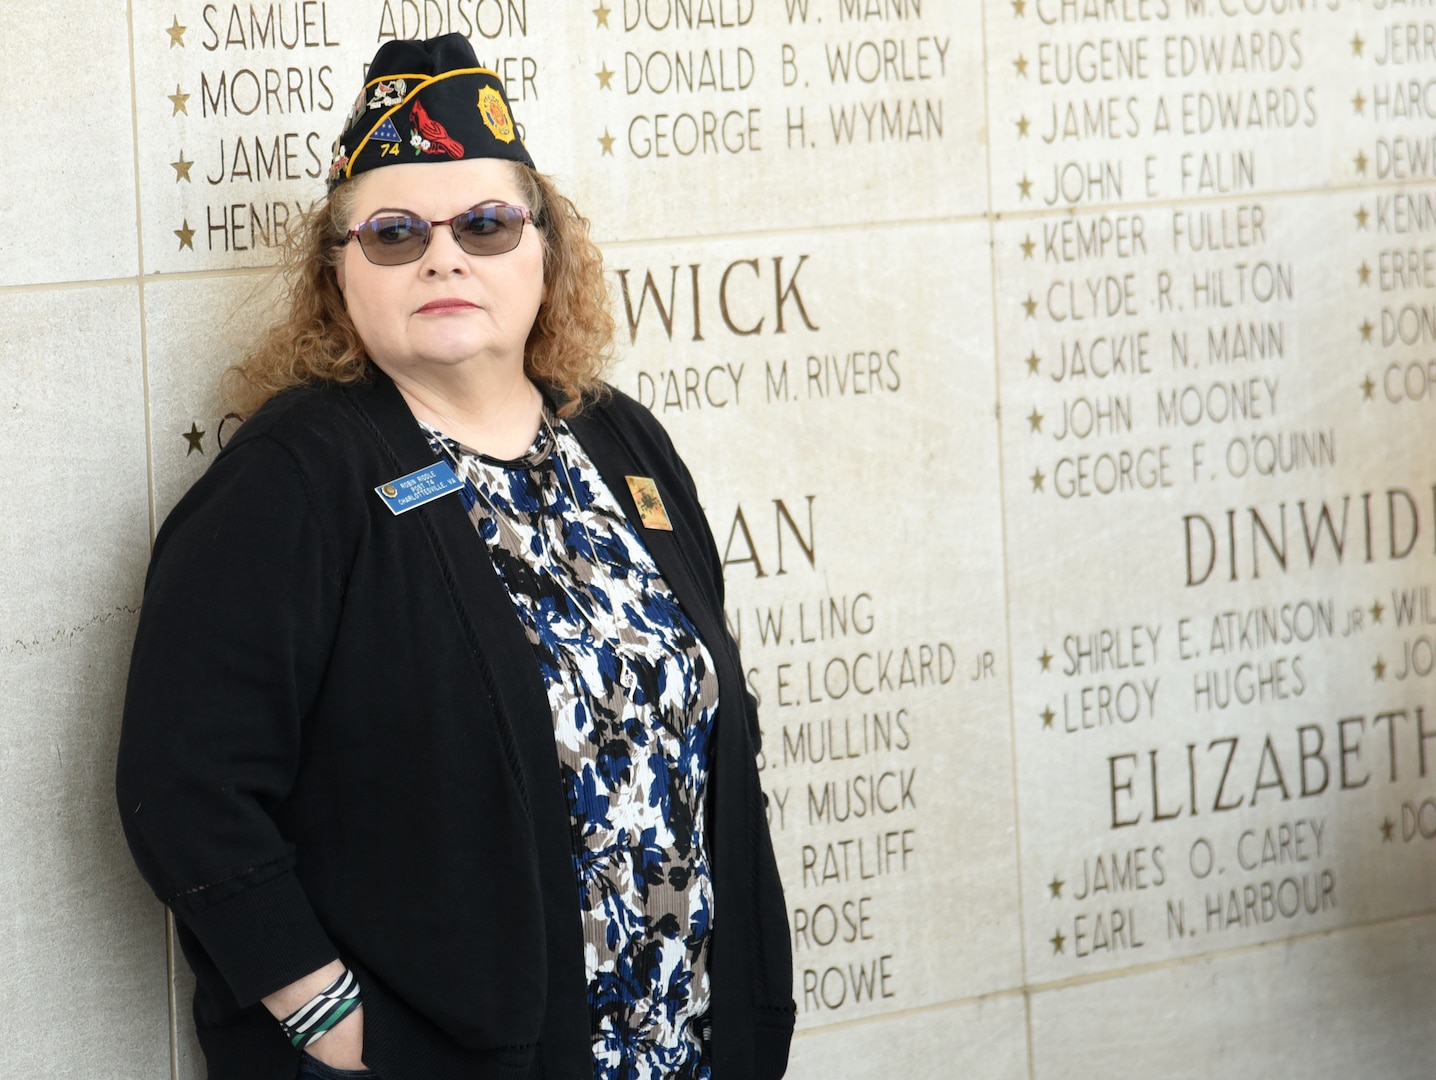 Women veterans recognized during ceremony at Virginia War Memorial